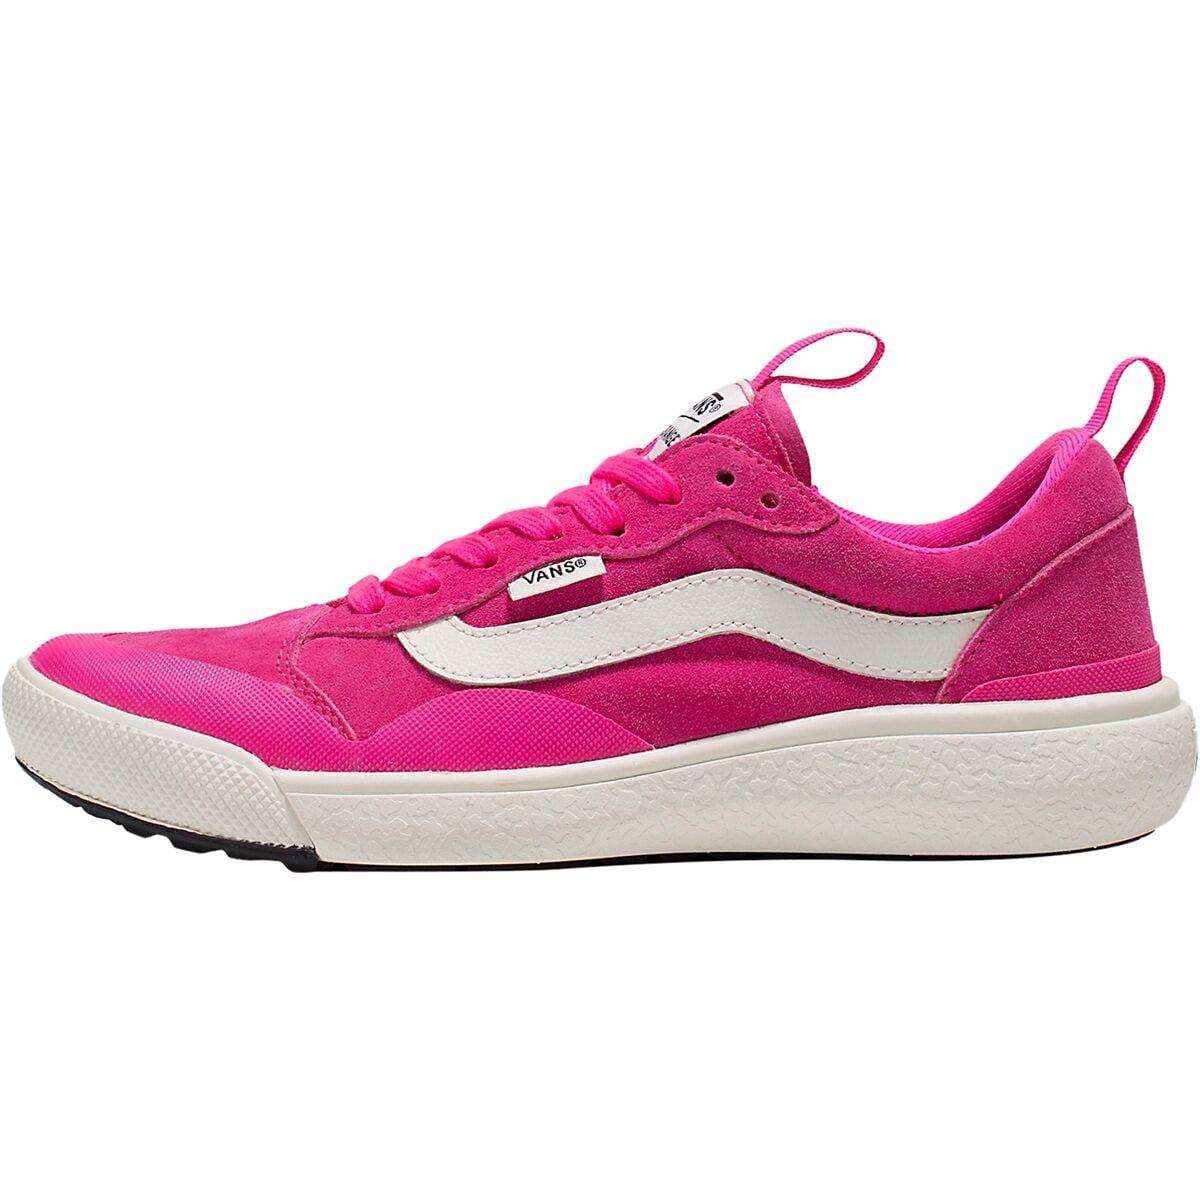 Vans Ultrarange Exo Se Shoe in Pink | Lyst